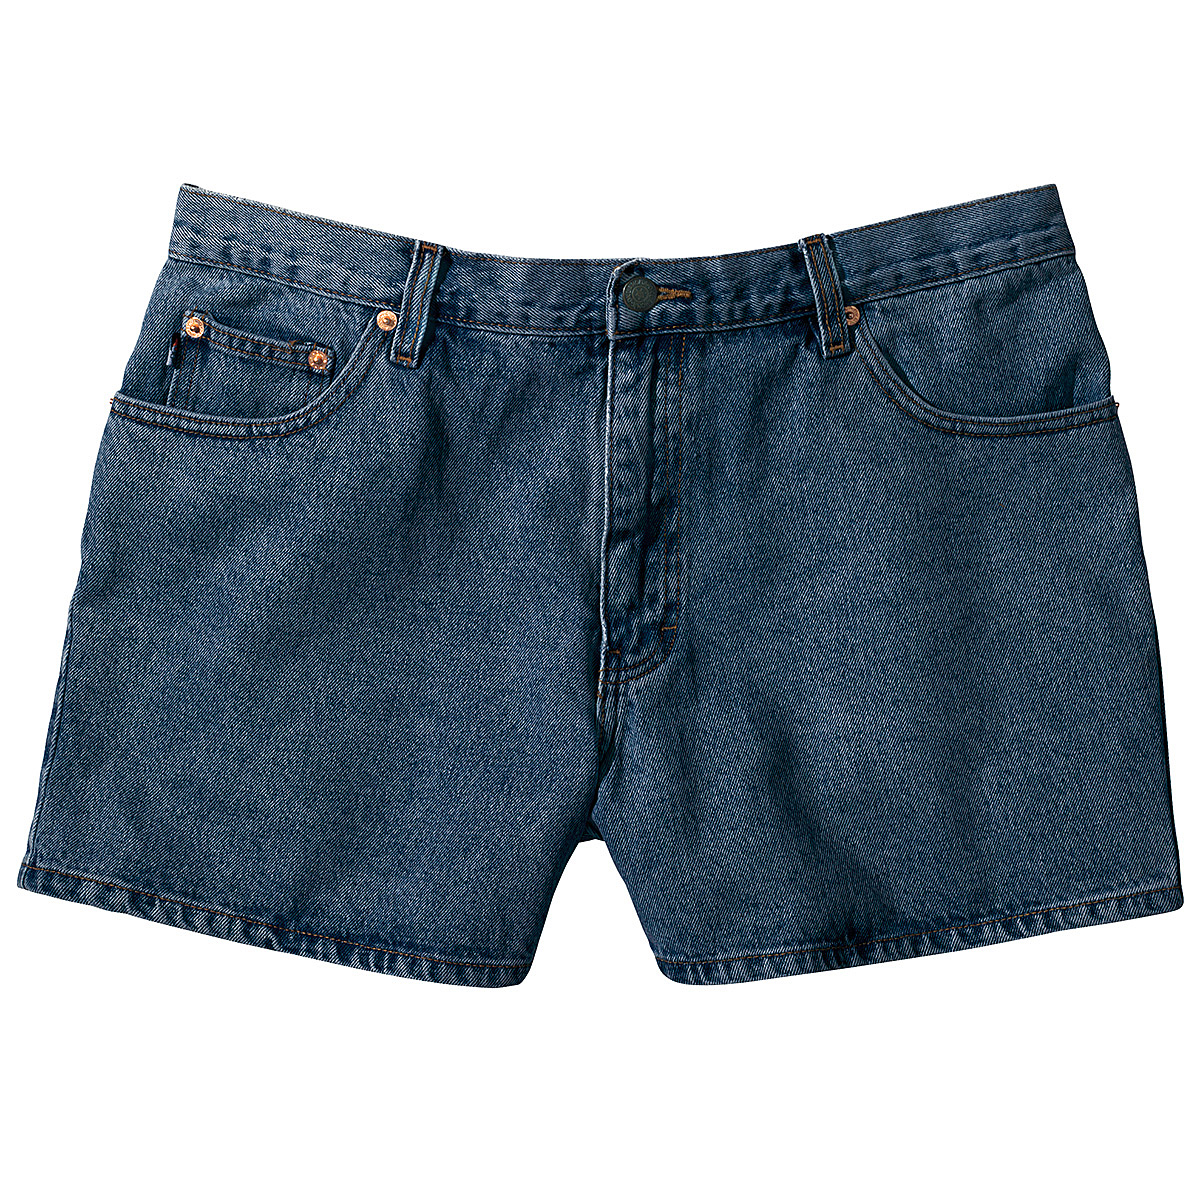 Jean shorts - Clothing